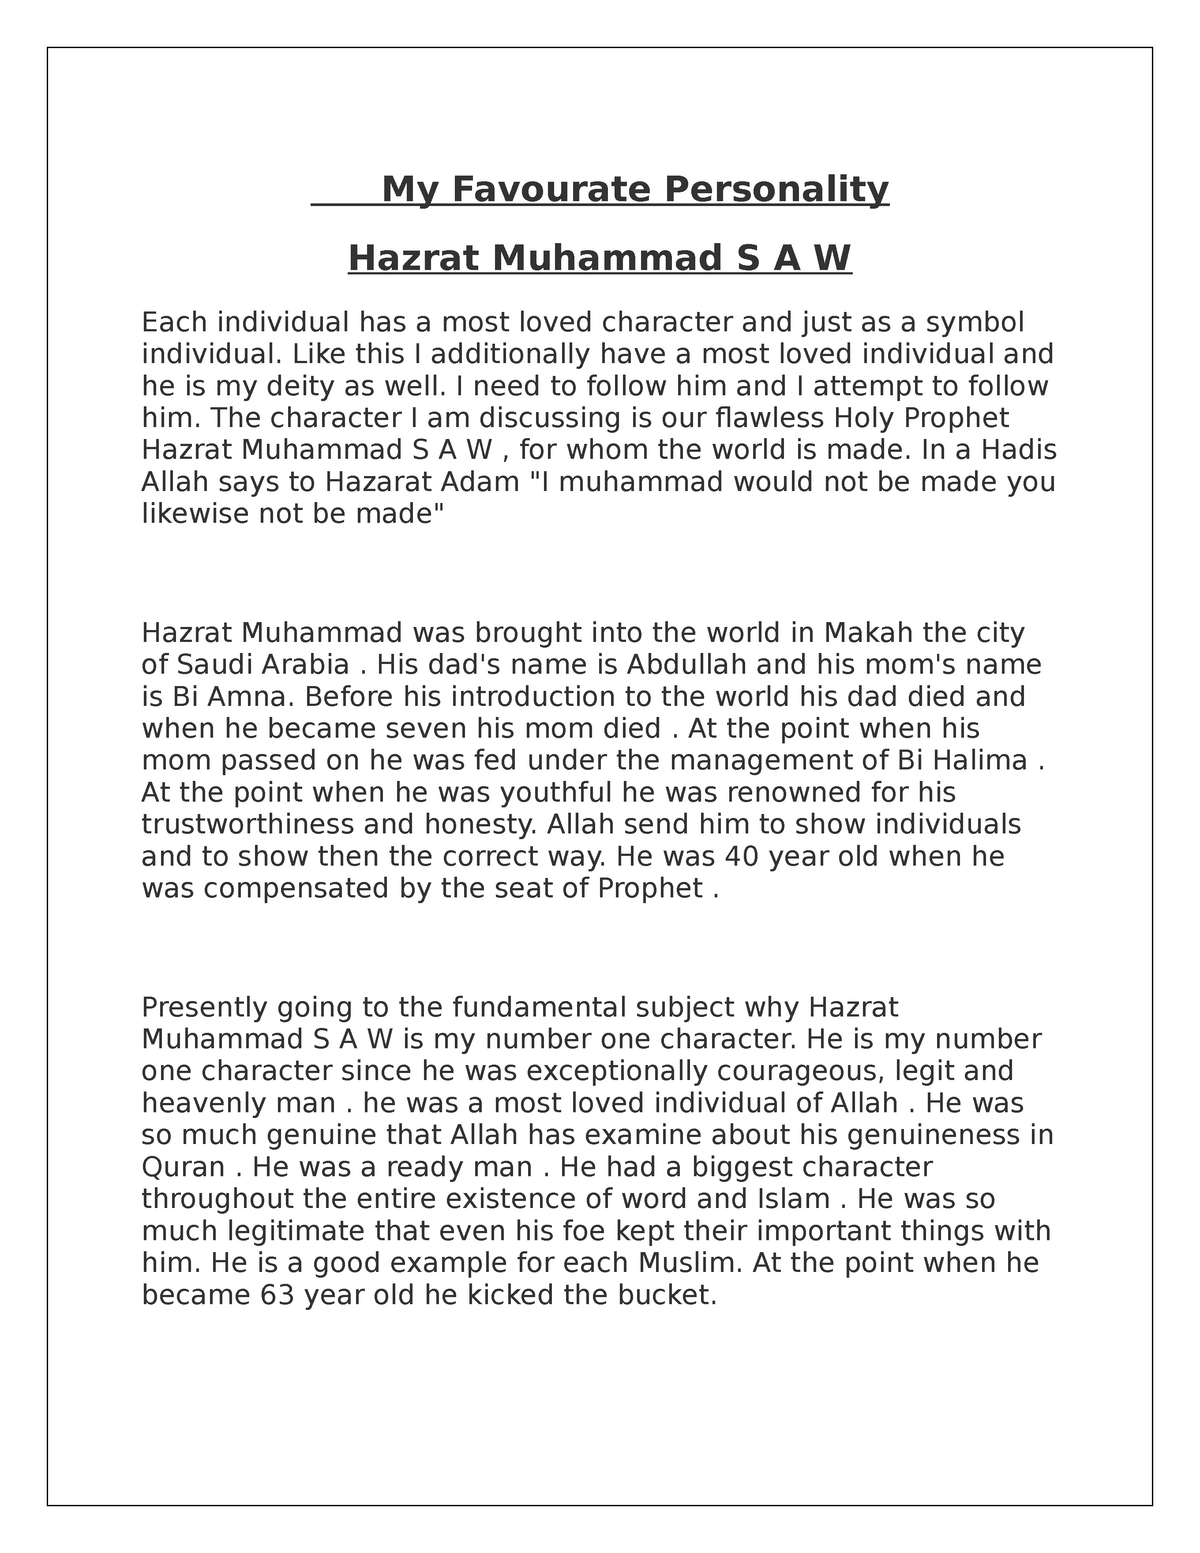 essay on my favorite personality hazrat muhammad